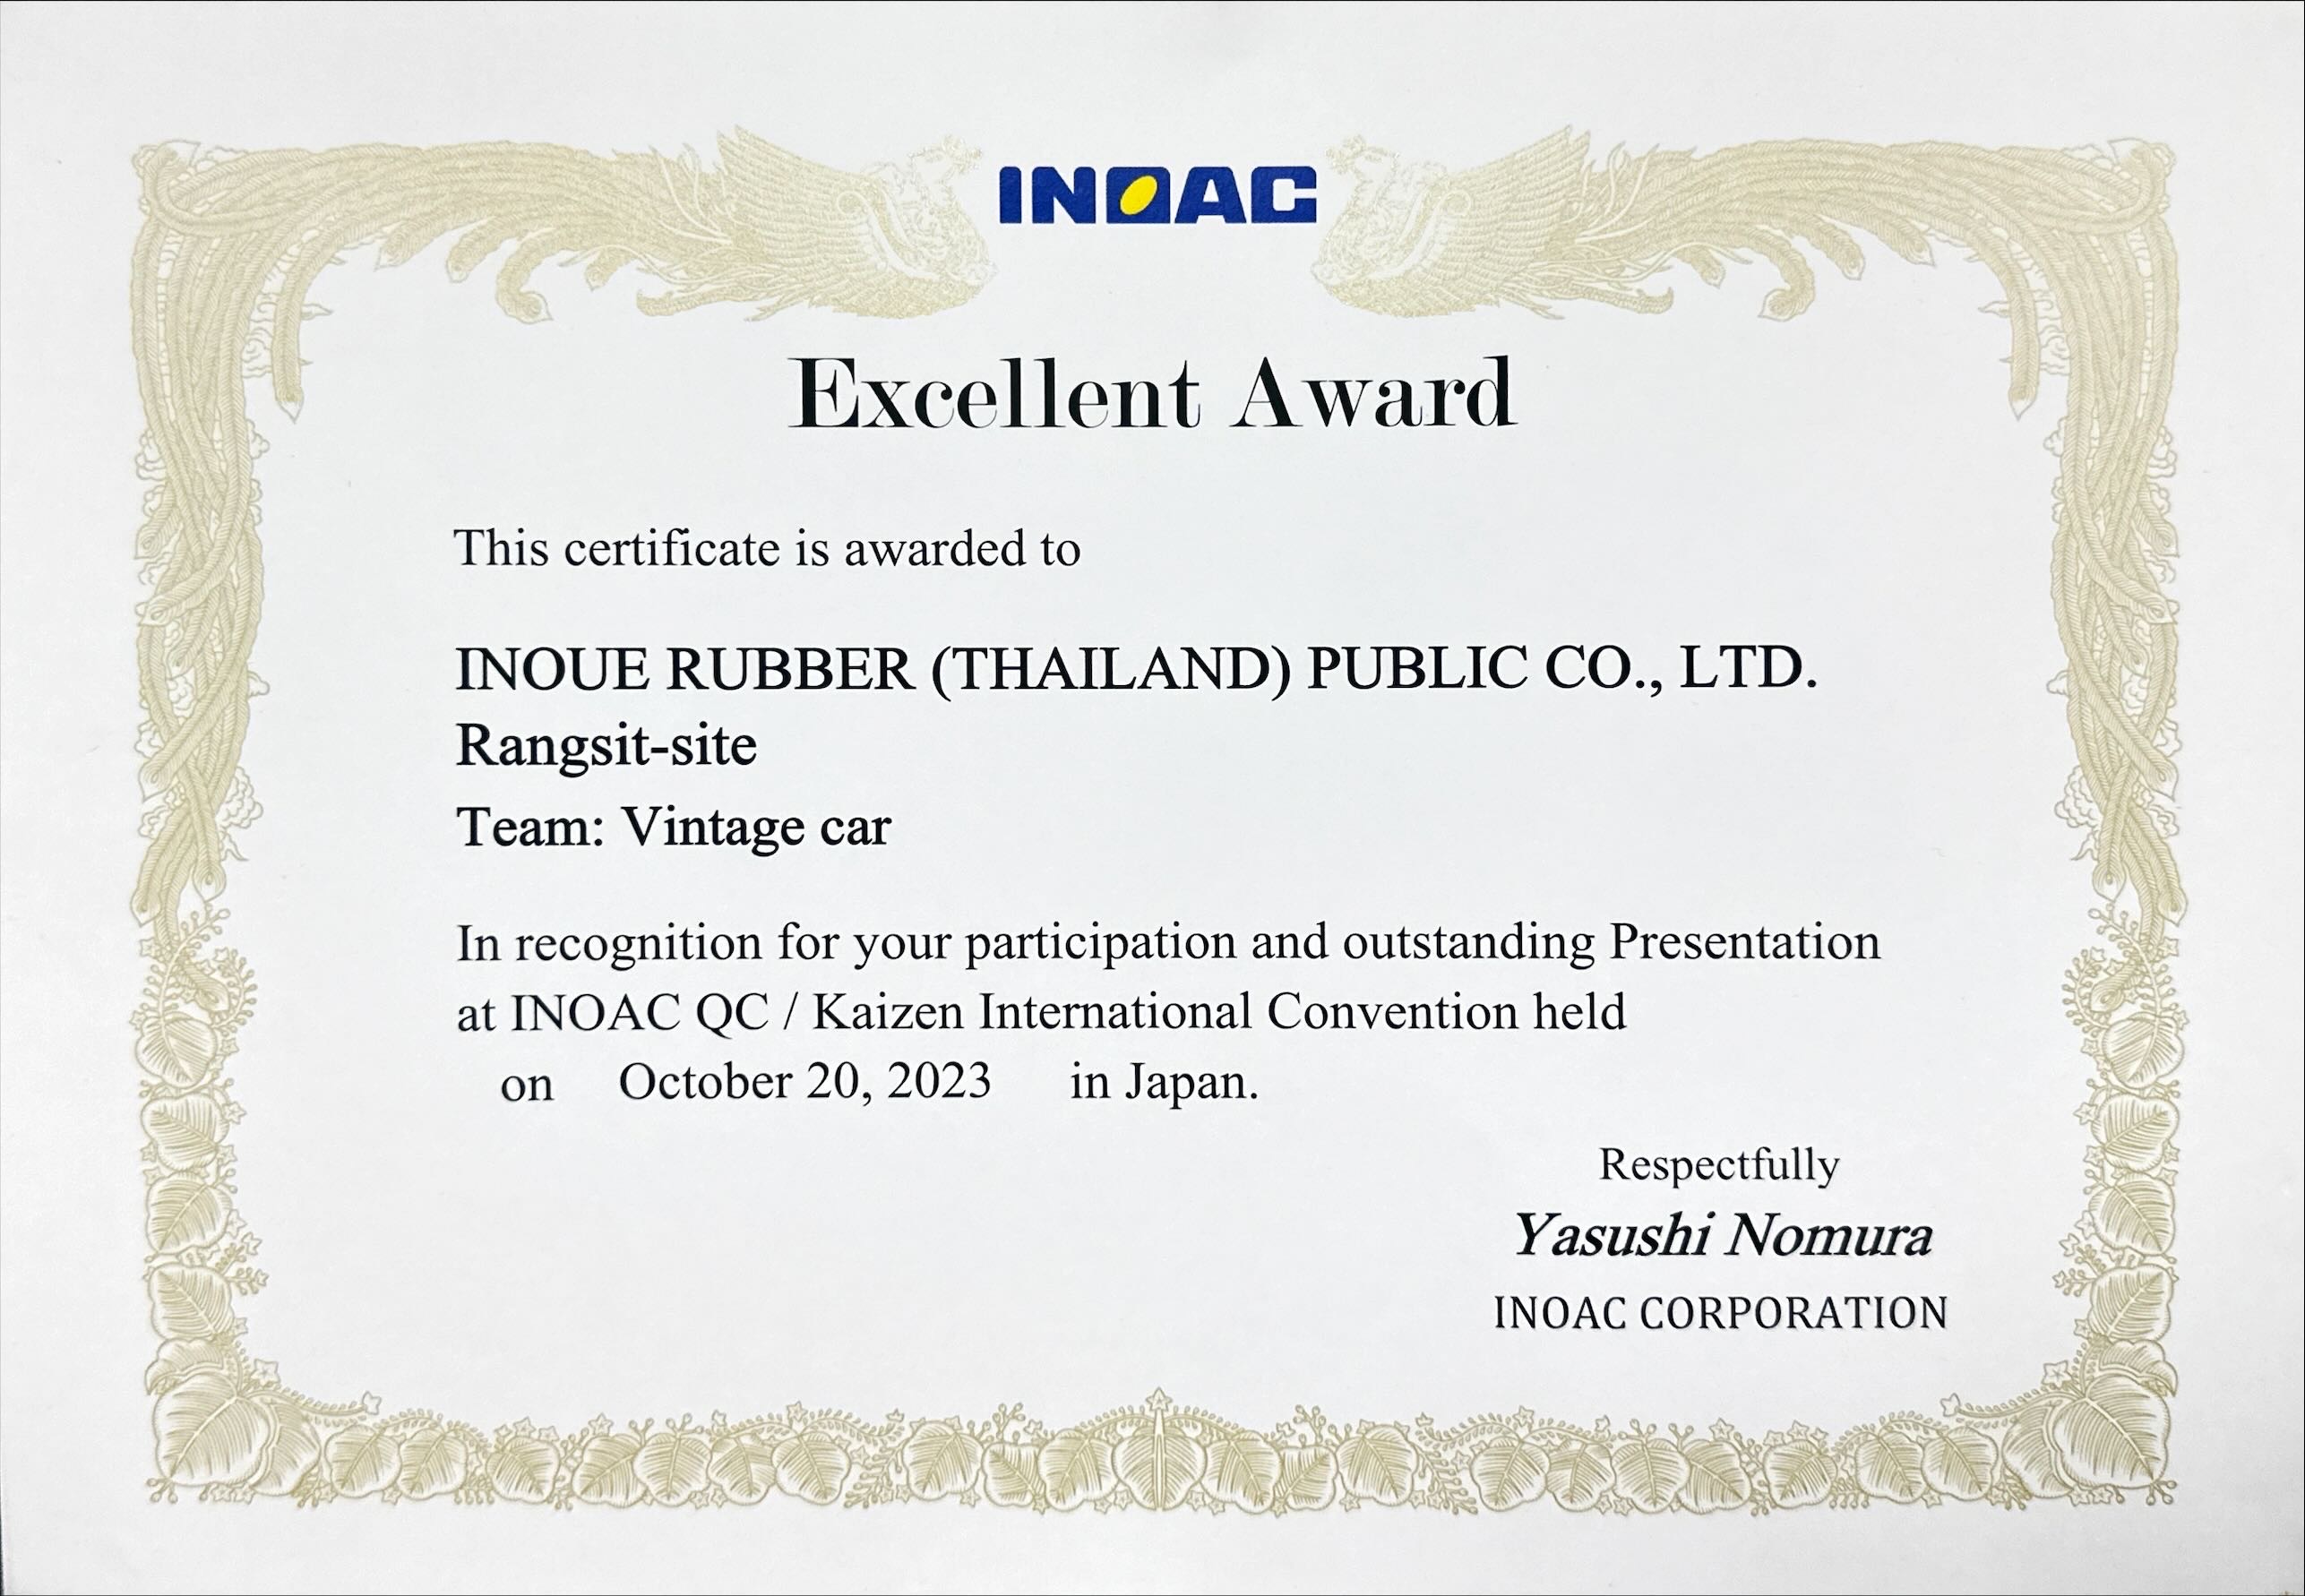 IRC ได้รับรางวัล “Excellent Award” จากการนำเสนอผลงาน QCC/KAIZEN ในงาน INOAC QC-KAIZEN INTERNATIONAL CONVENTION ประเทศญี่ปุ่น